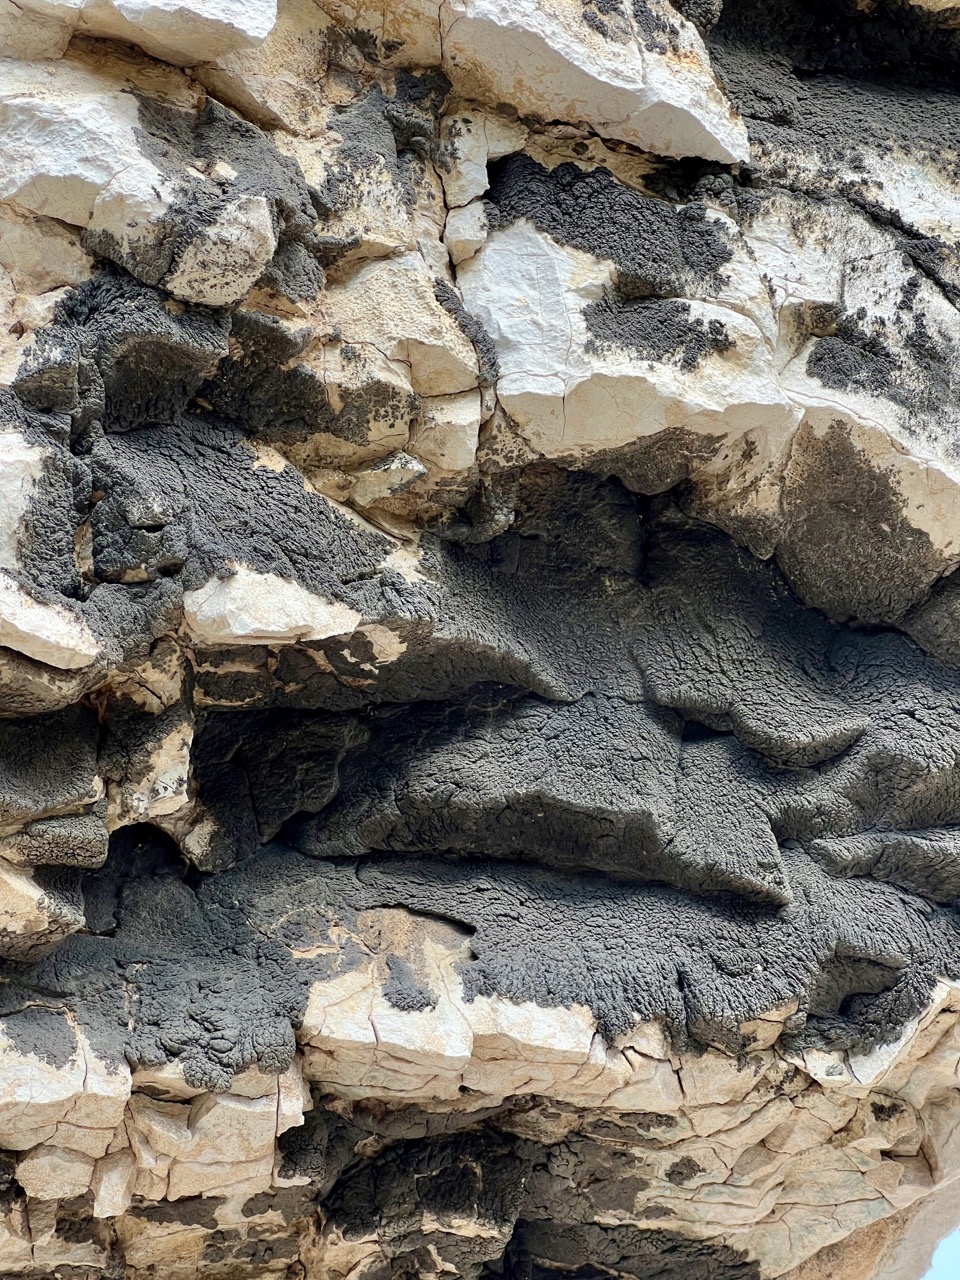 This striking black lichen cuddles the rock at Roche Percée.